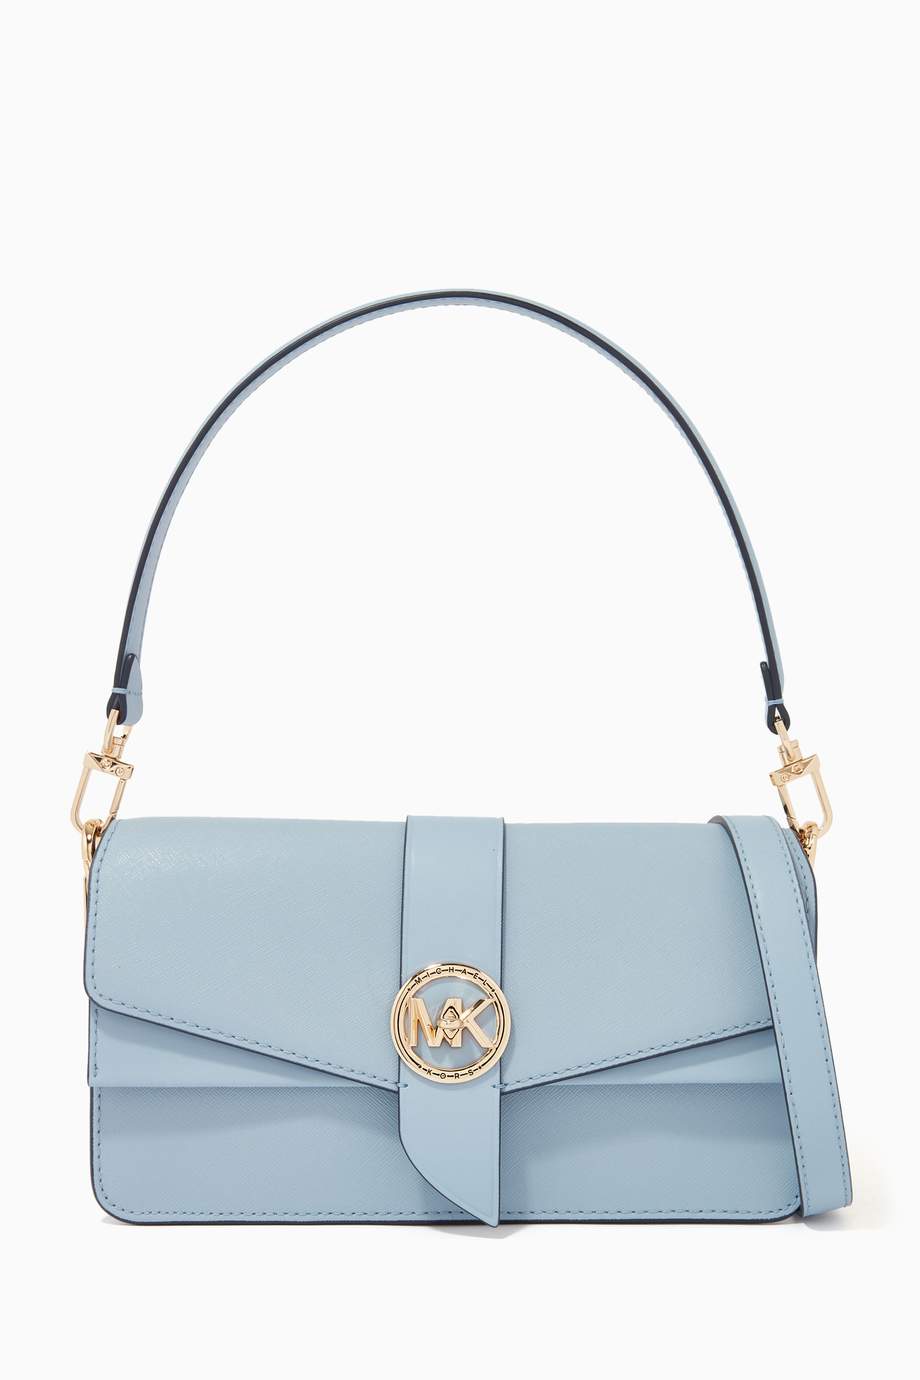 Shop Michael Kors Blue Medium Greenwich Shoulder Bag in Saffiano Leather for Women | Ounass UAE